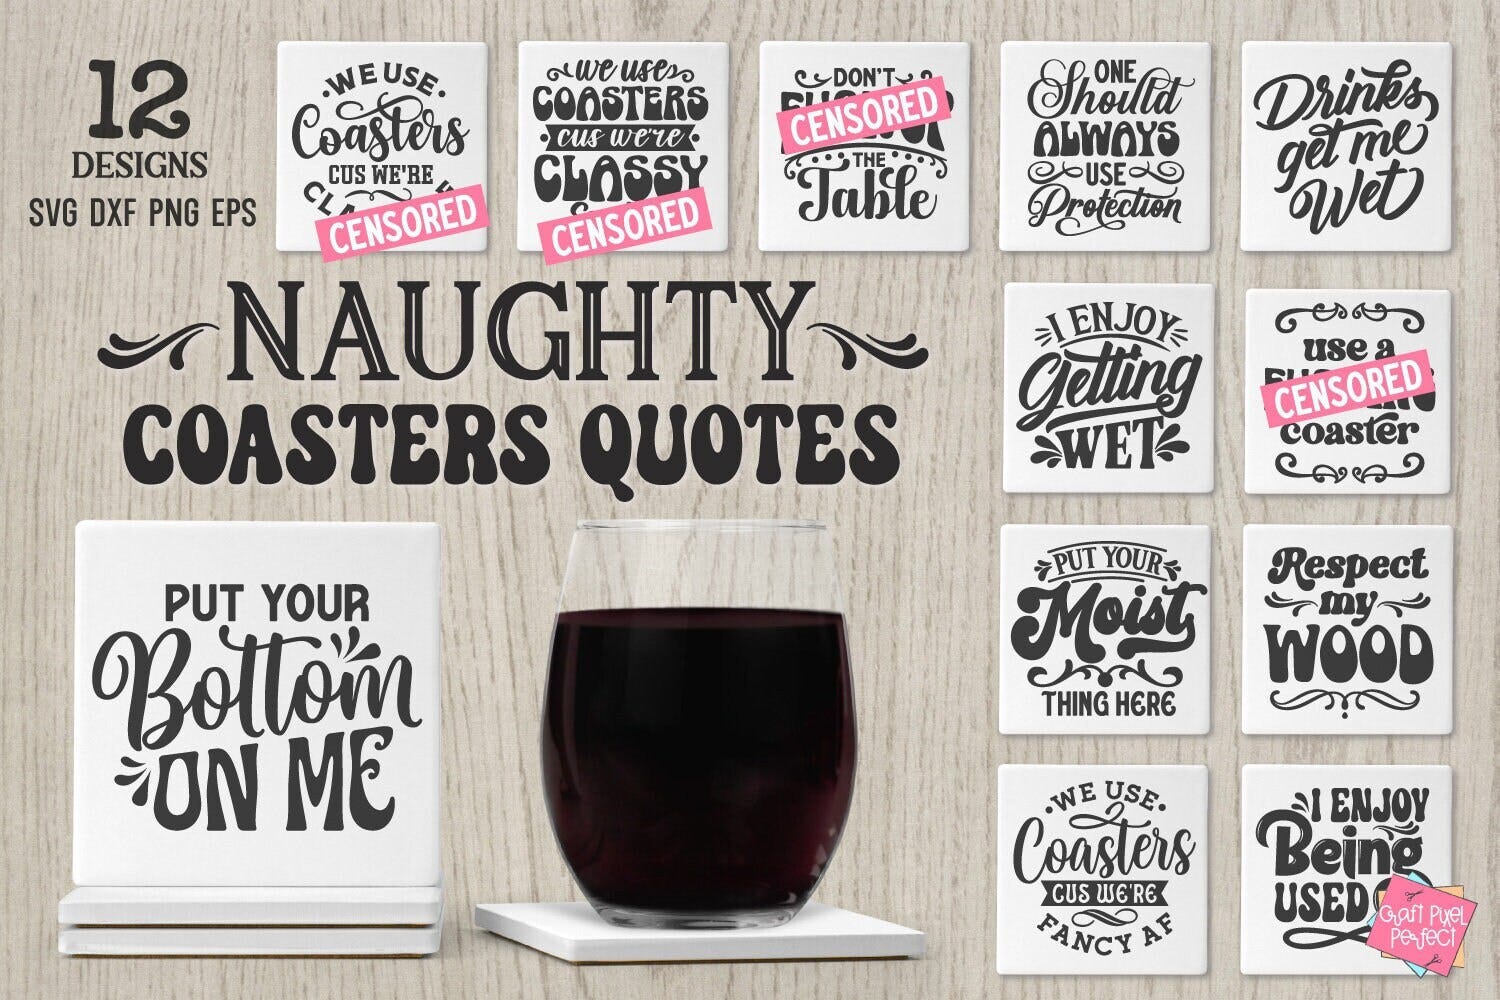 Naughty Coaster Quotes SVG Bundle, Funny Coaster Sayings, Coaster Svg, Sarcastic Coaster Designs, Beer Coasters, Wine Coasters, Alcohol SVG